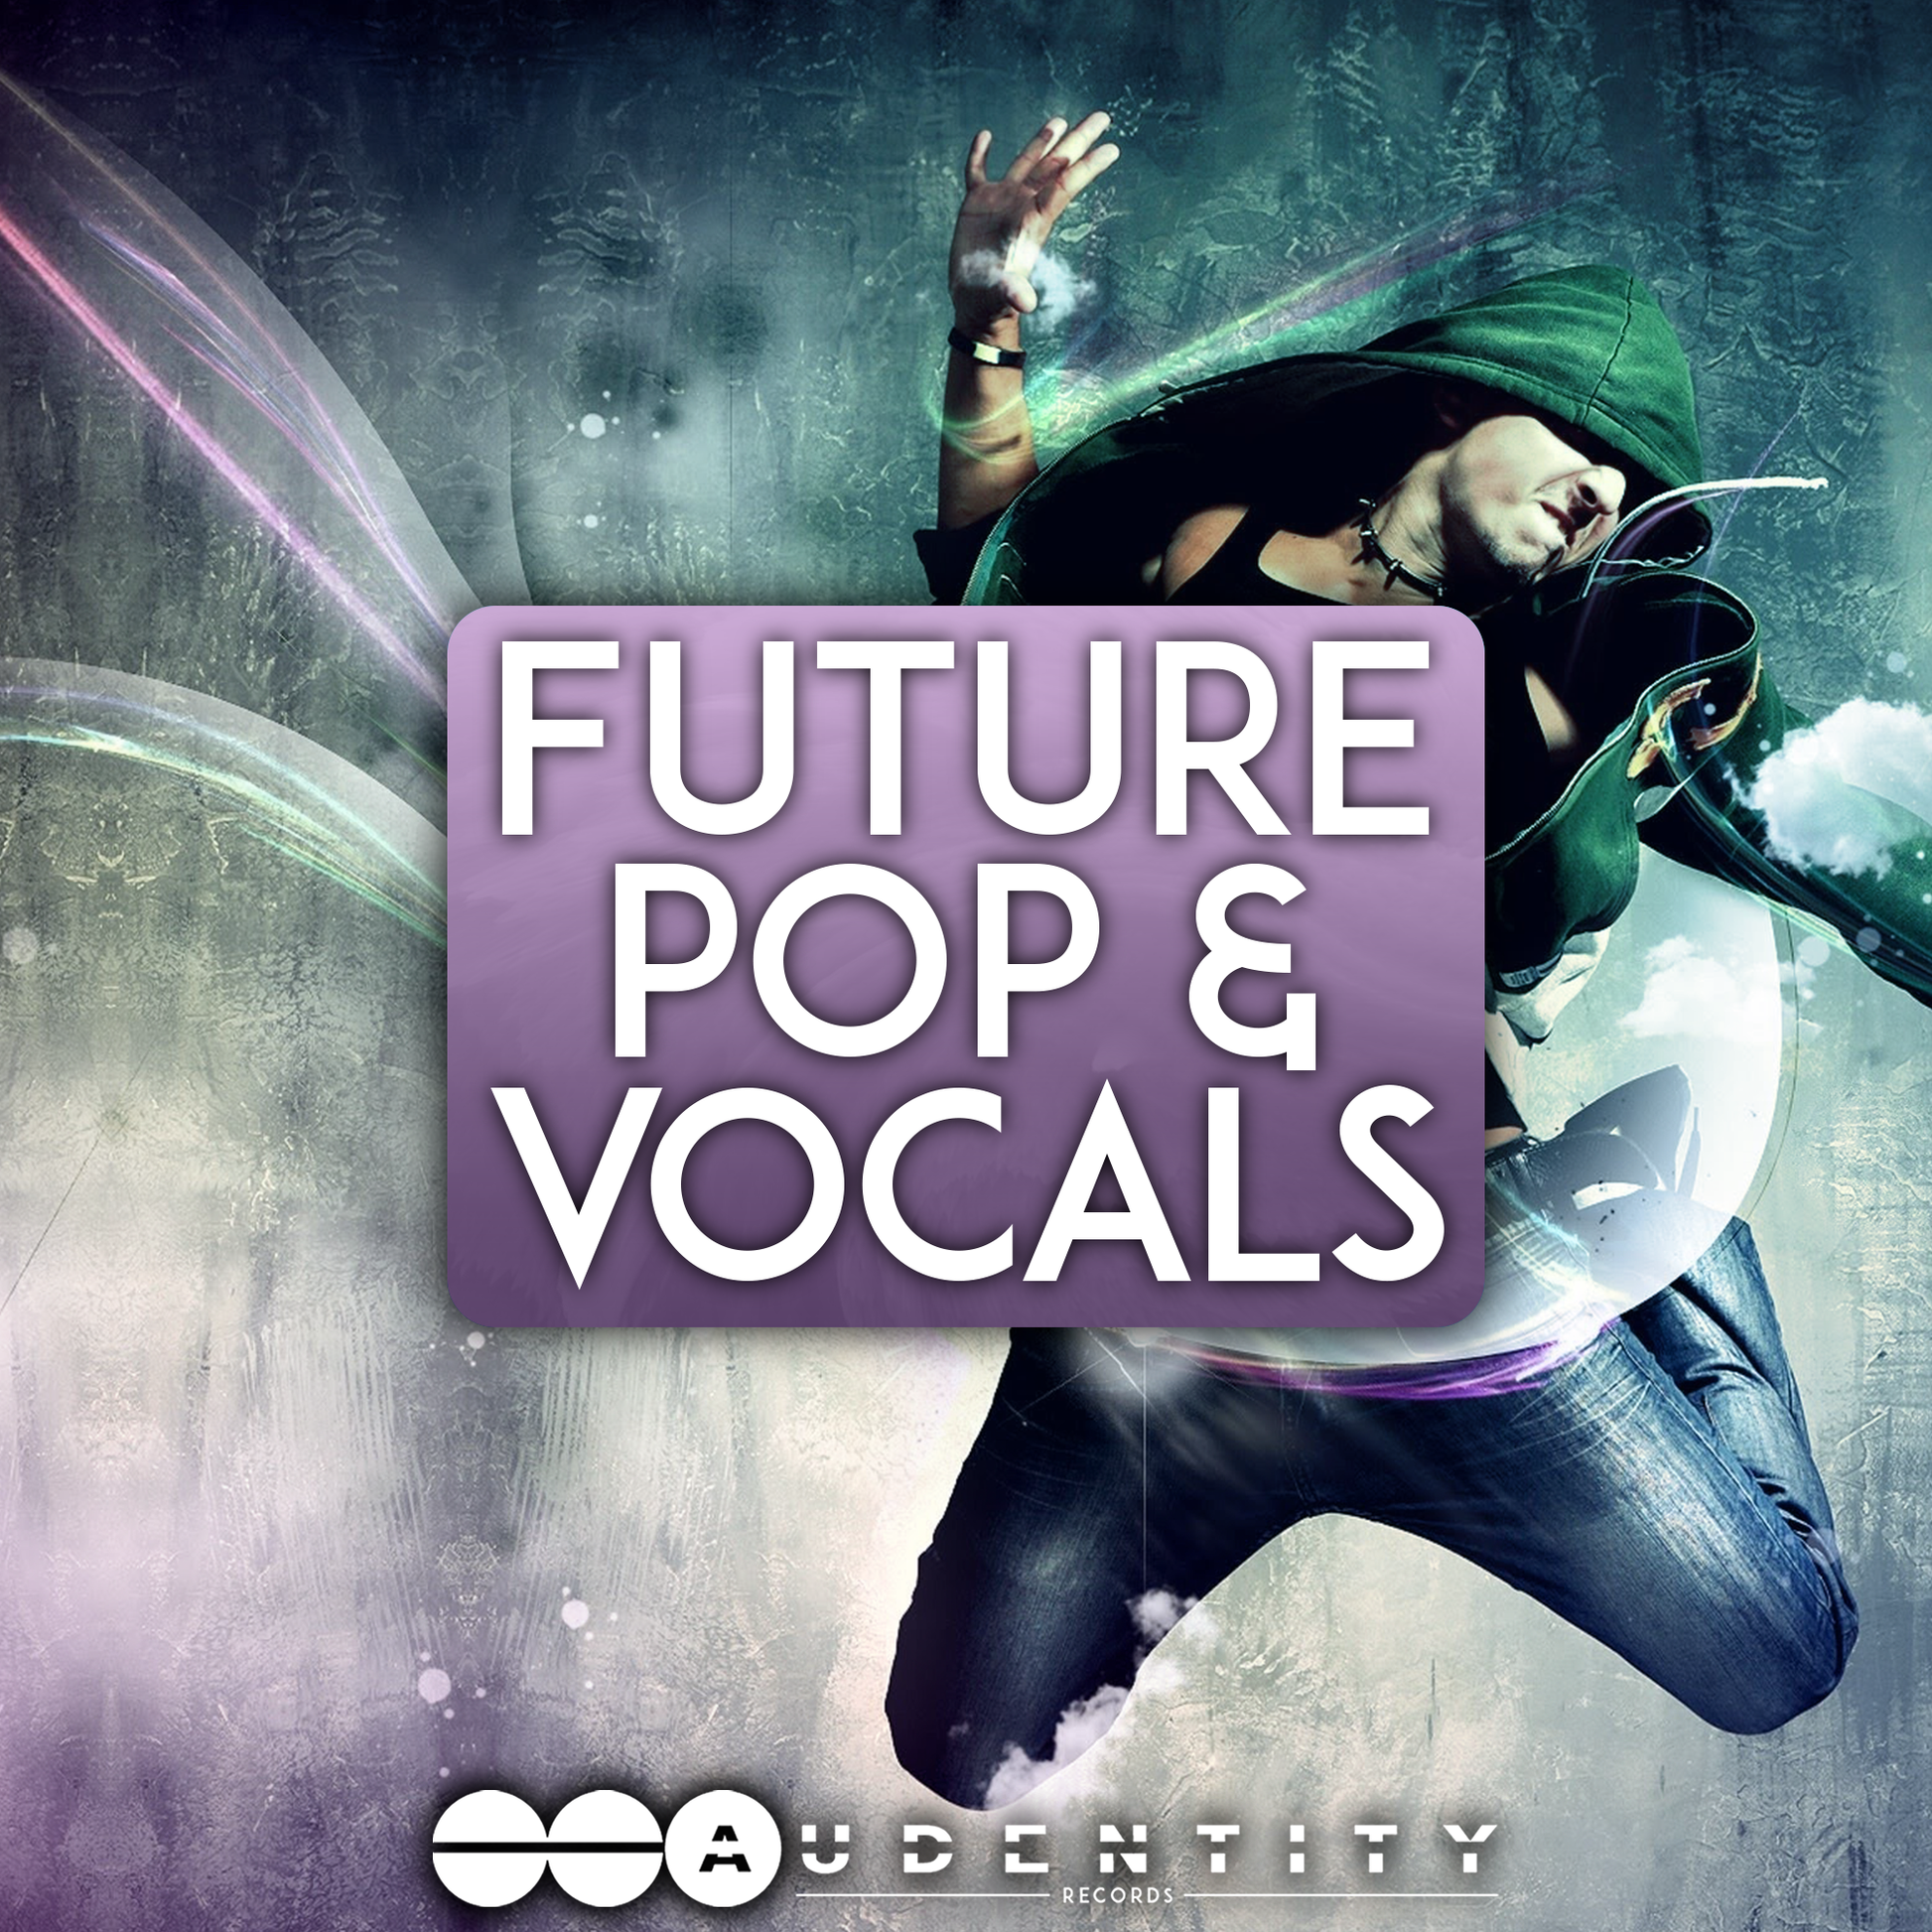 Future Pop & Vocals - Audentity Records | Samplestore